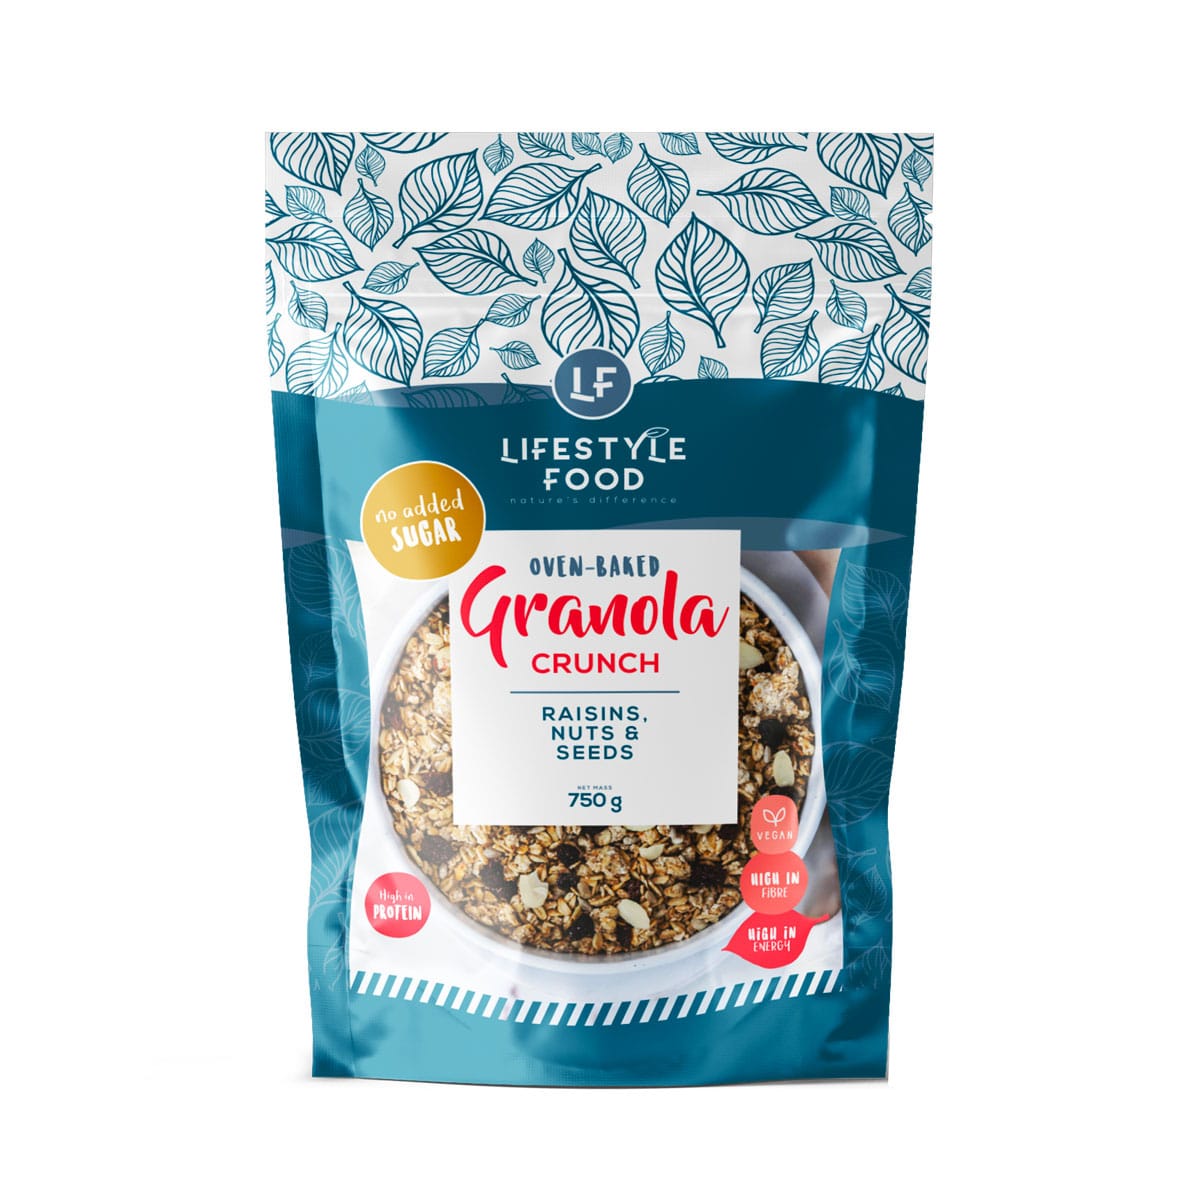 Lifestyle Food Granola Crunch No Added Sugar Raisins, Nuts & Seeds - 750g